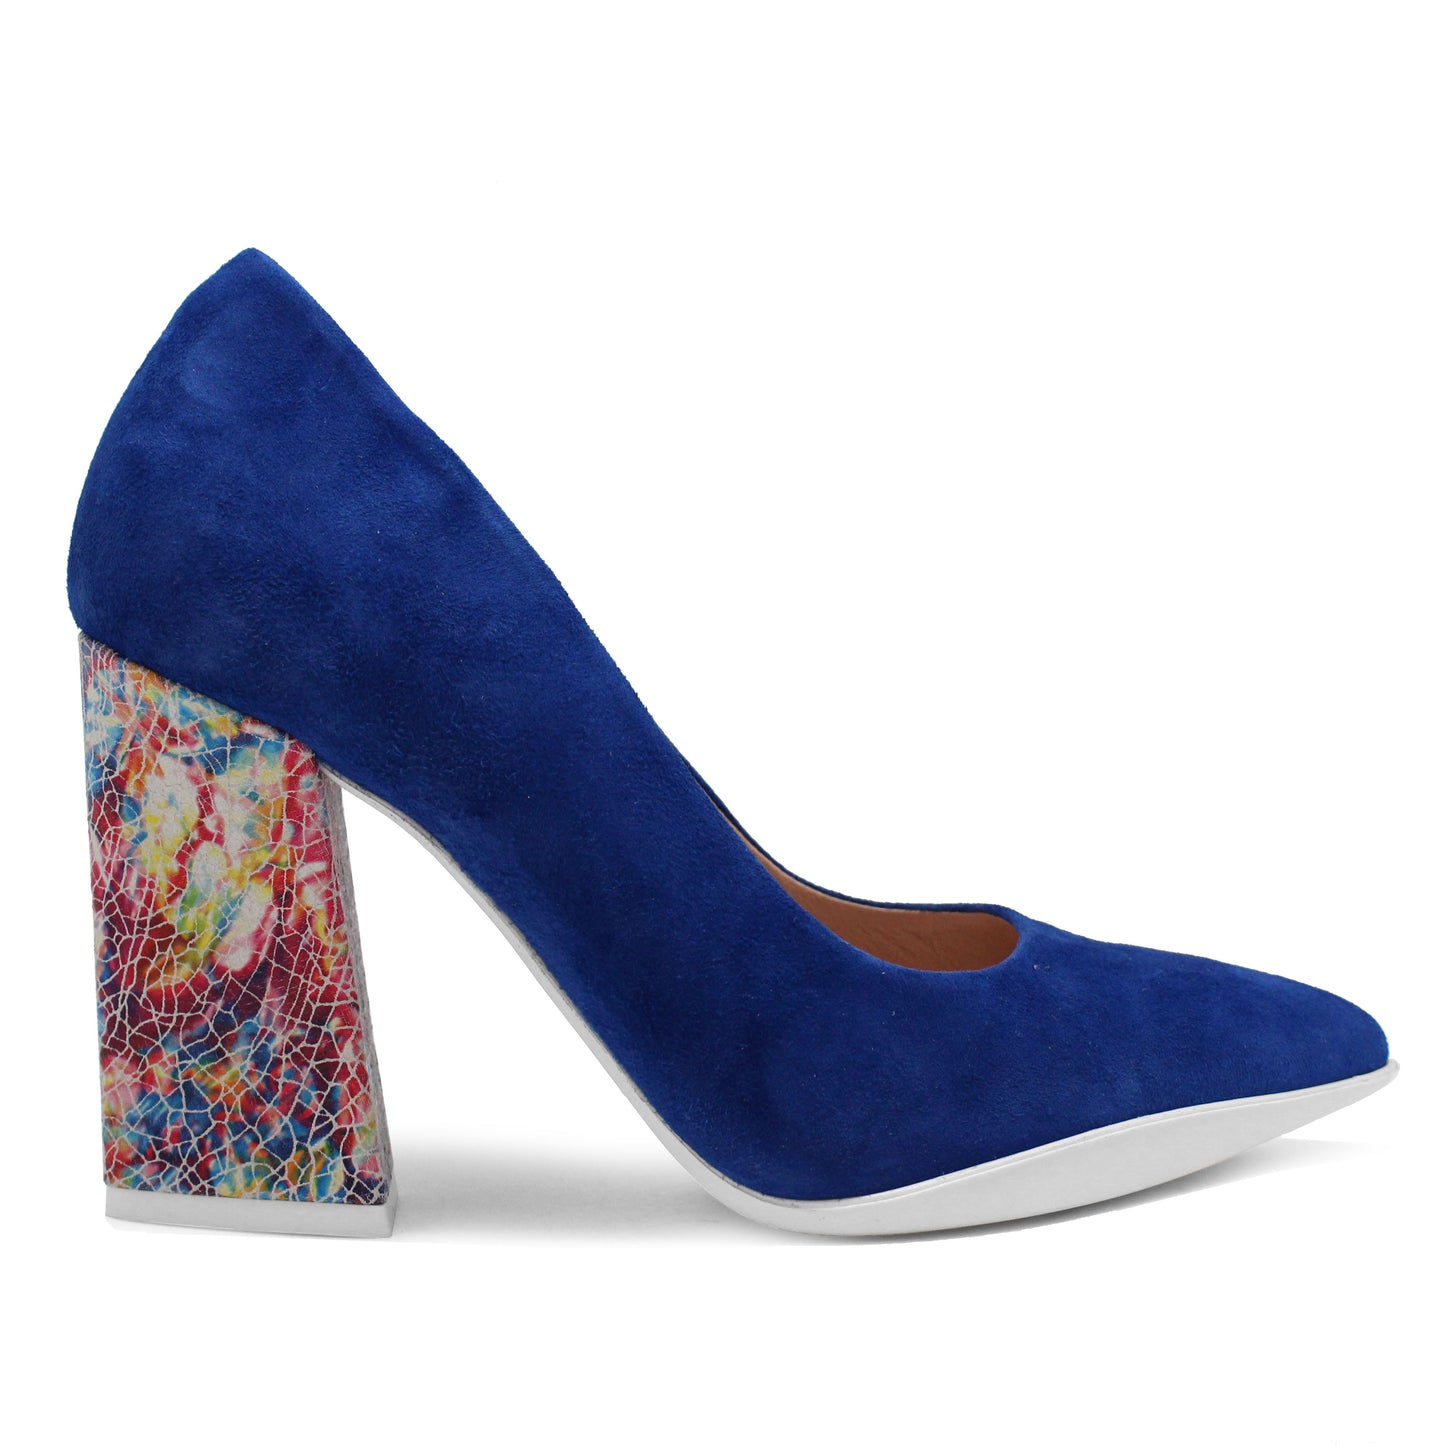 Pailette - Royal Blue High heel shoe